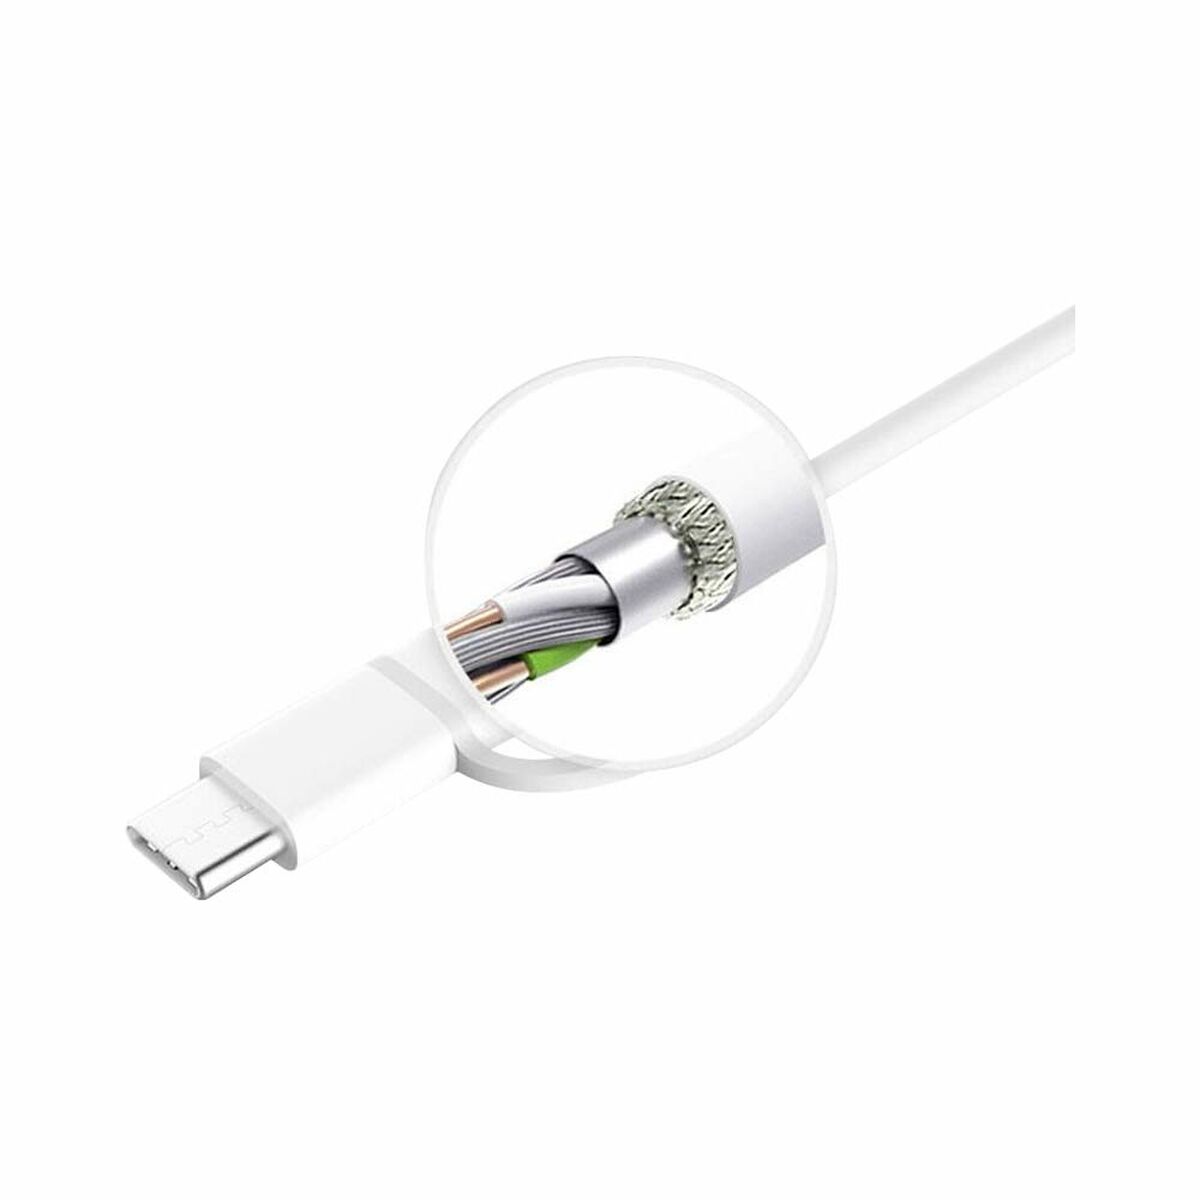 USB Cable to micro USB Xiaomi White 30 cm